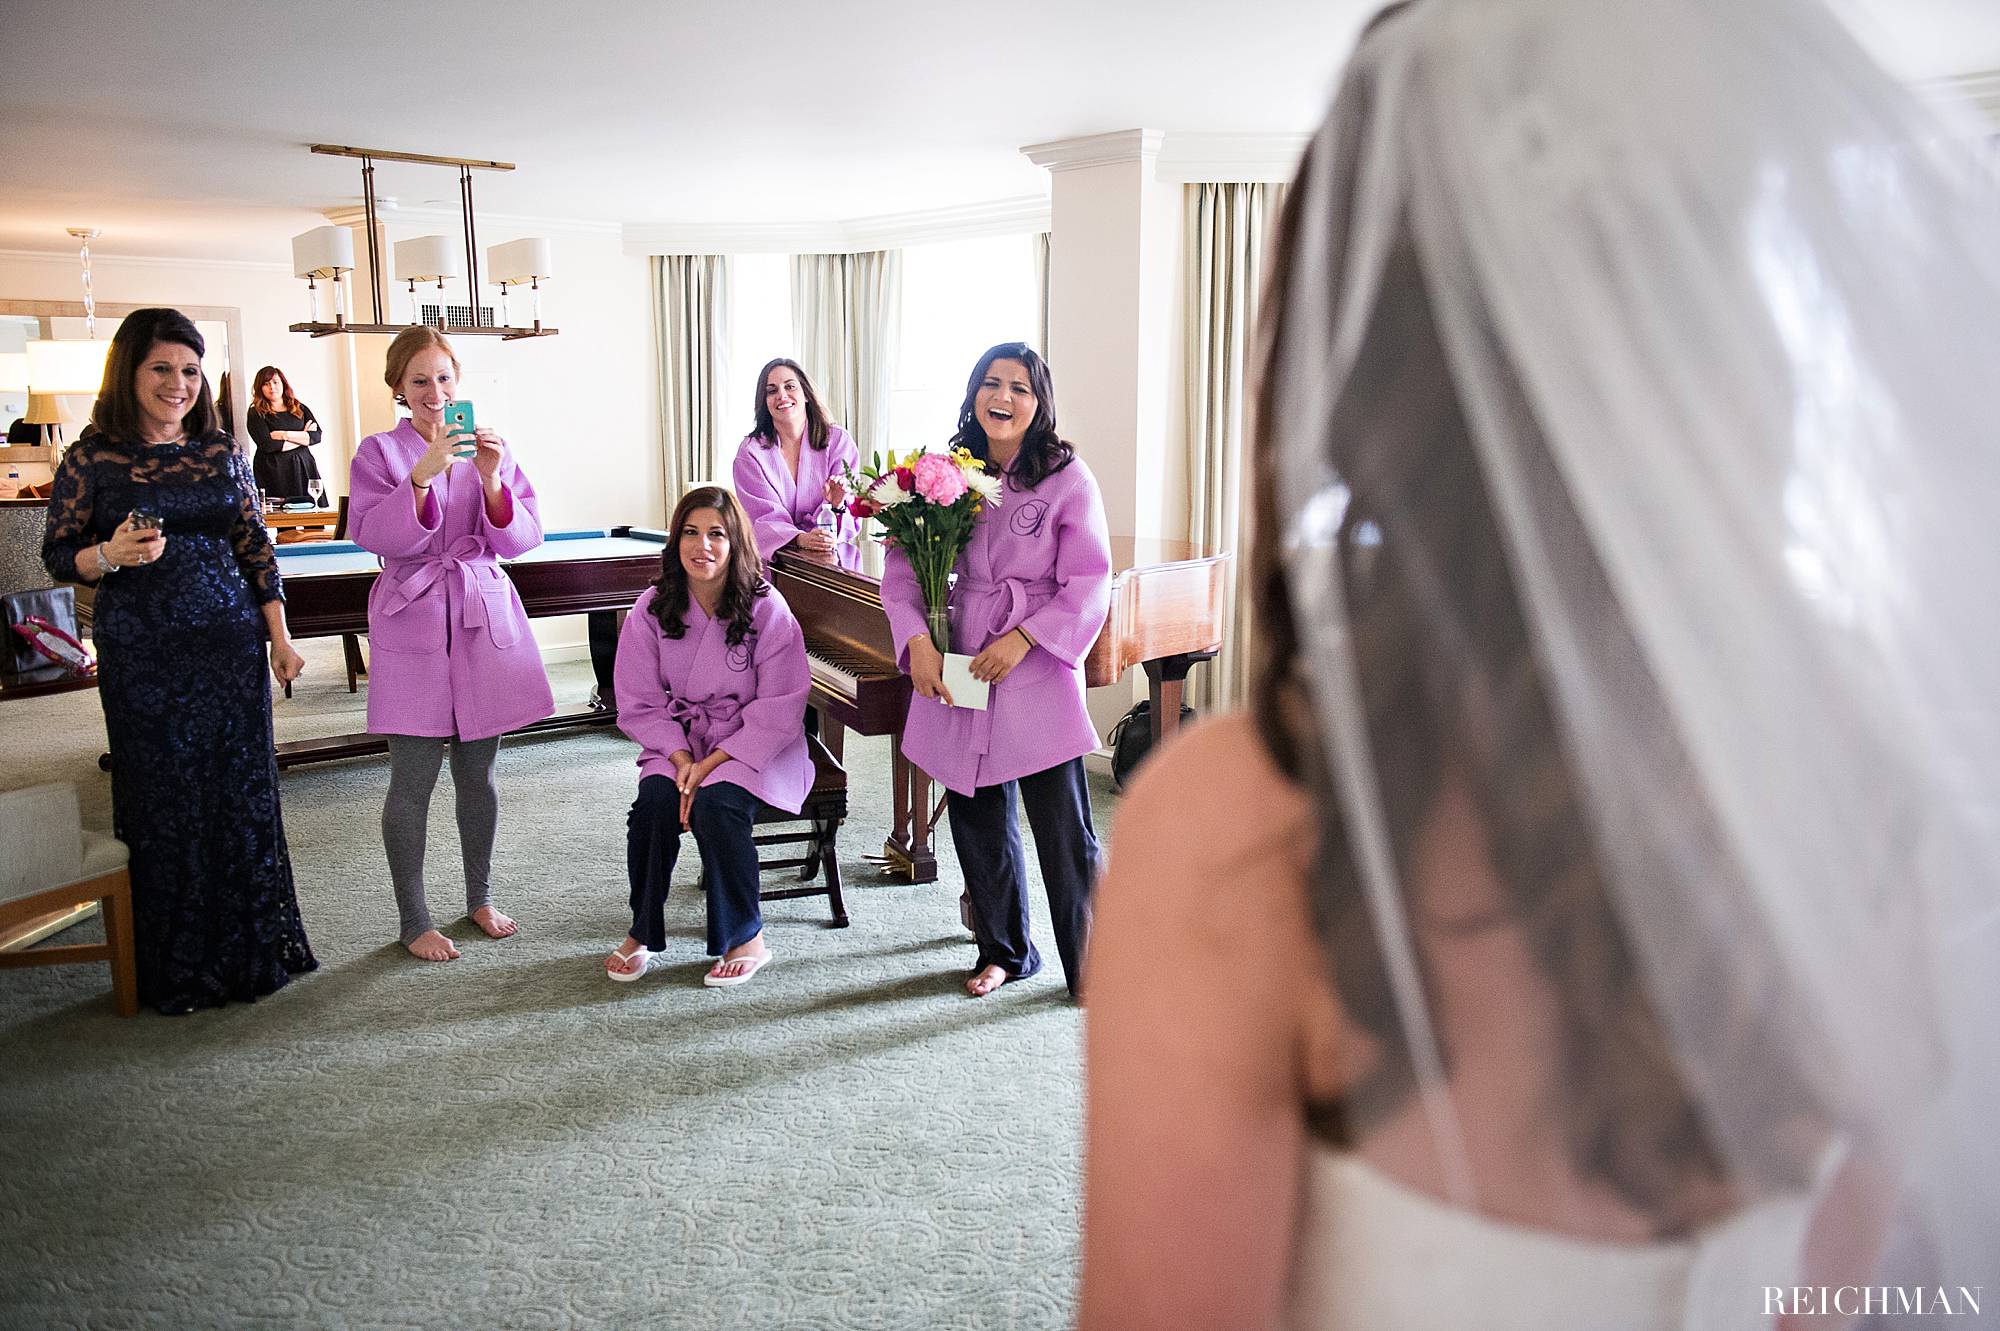 Bride revealing dress to bridesmaids